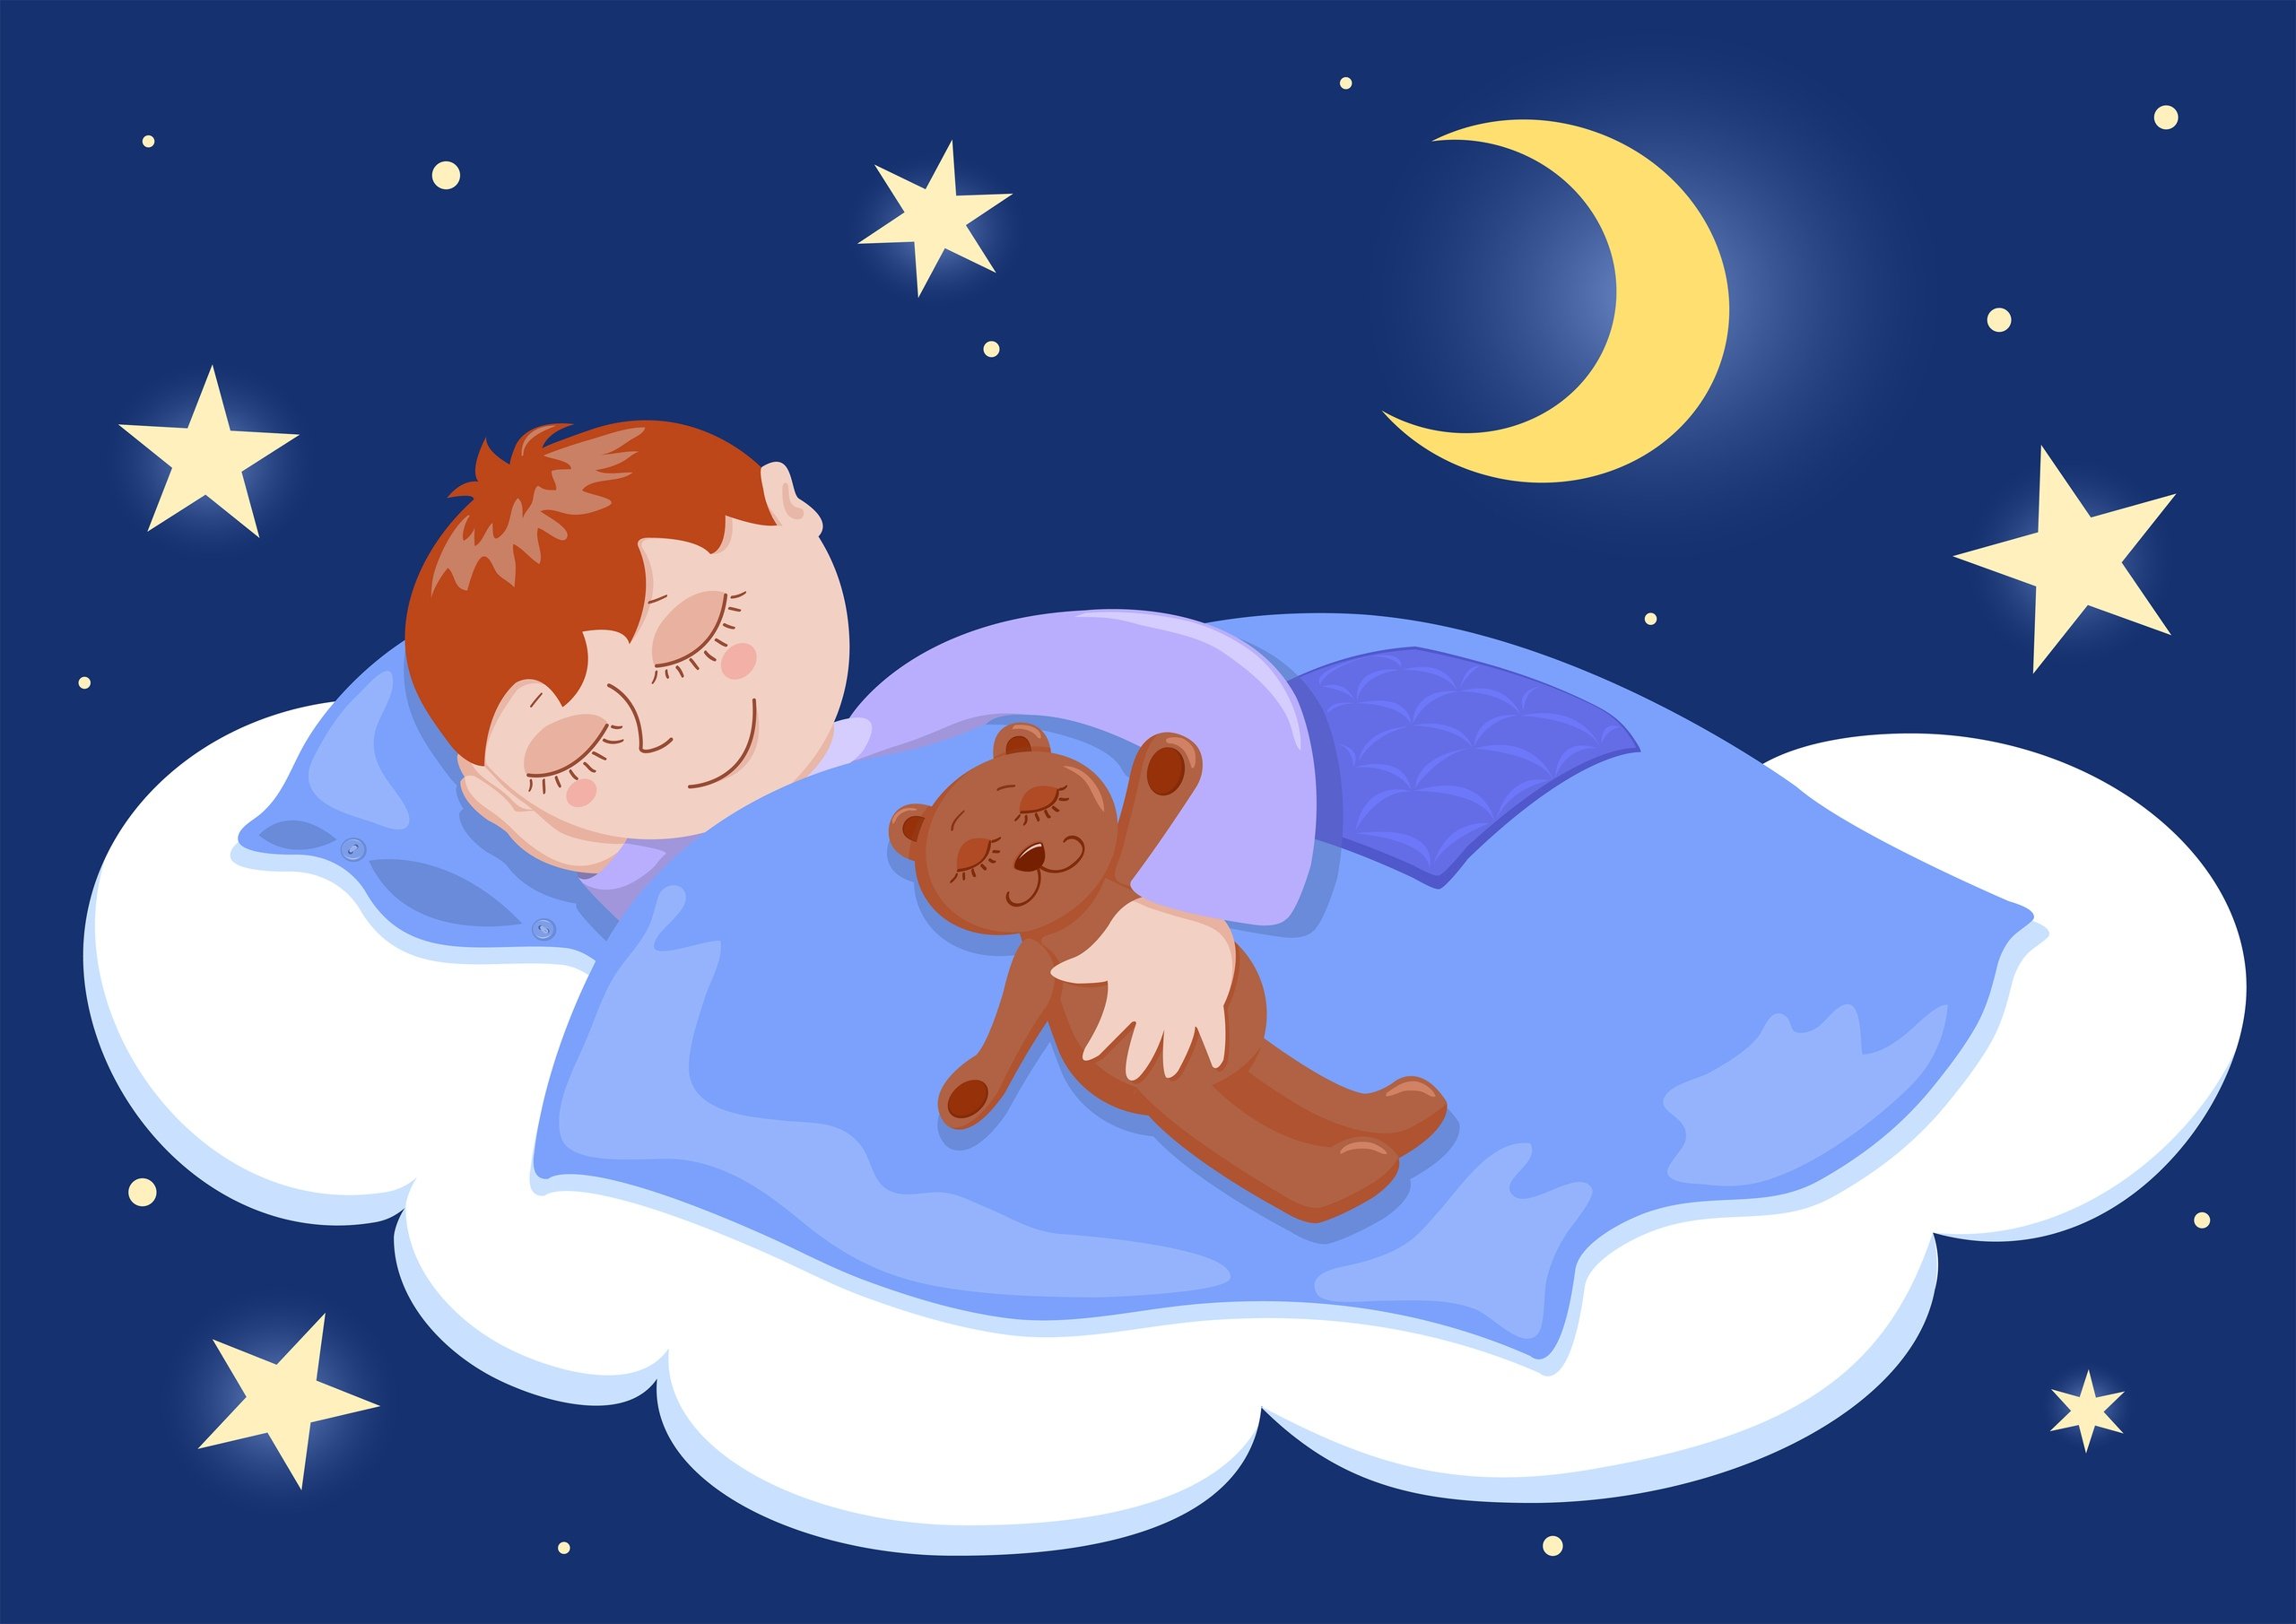 Иллюстрация на тему сна для ребенка